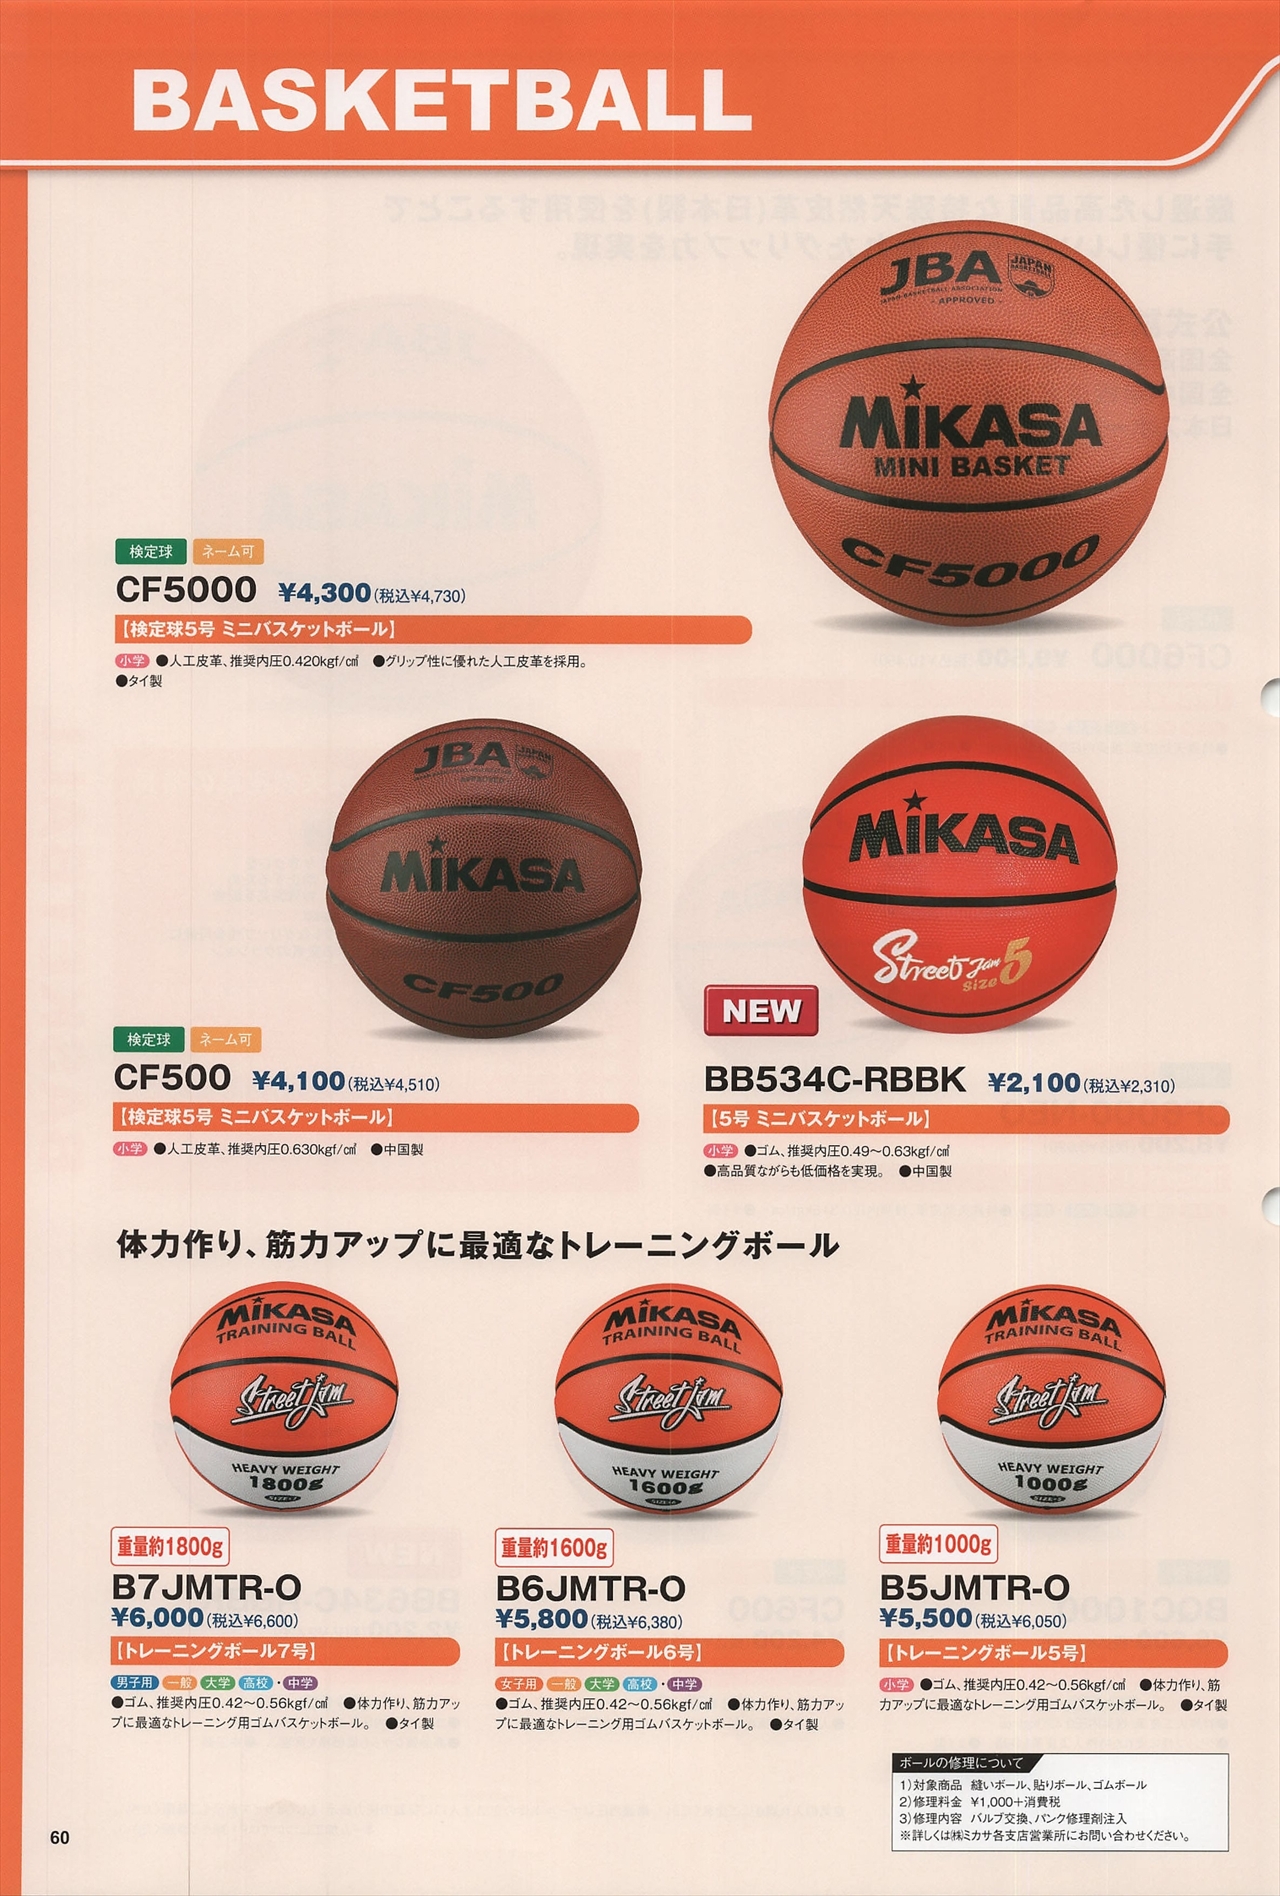 MIKASA]ミカサ ゴムバスケットボール7号球 トレーニング用重量1.8kg 通販